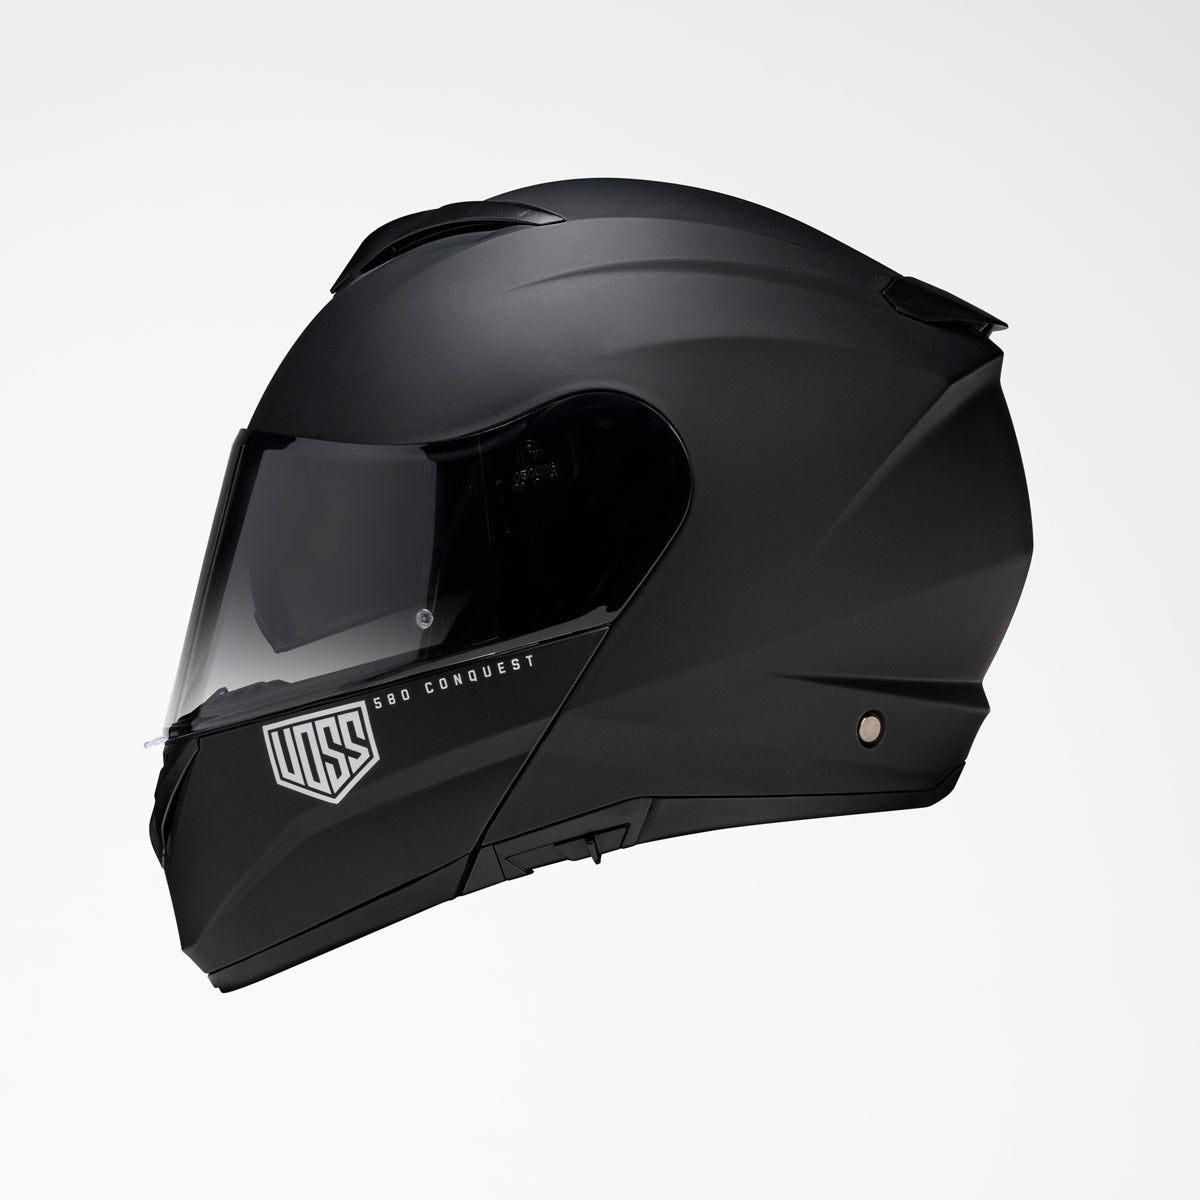 Voss 580 Conquest Matte Black Helmet